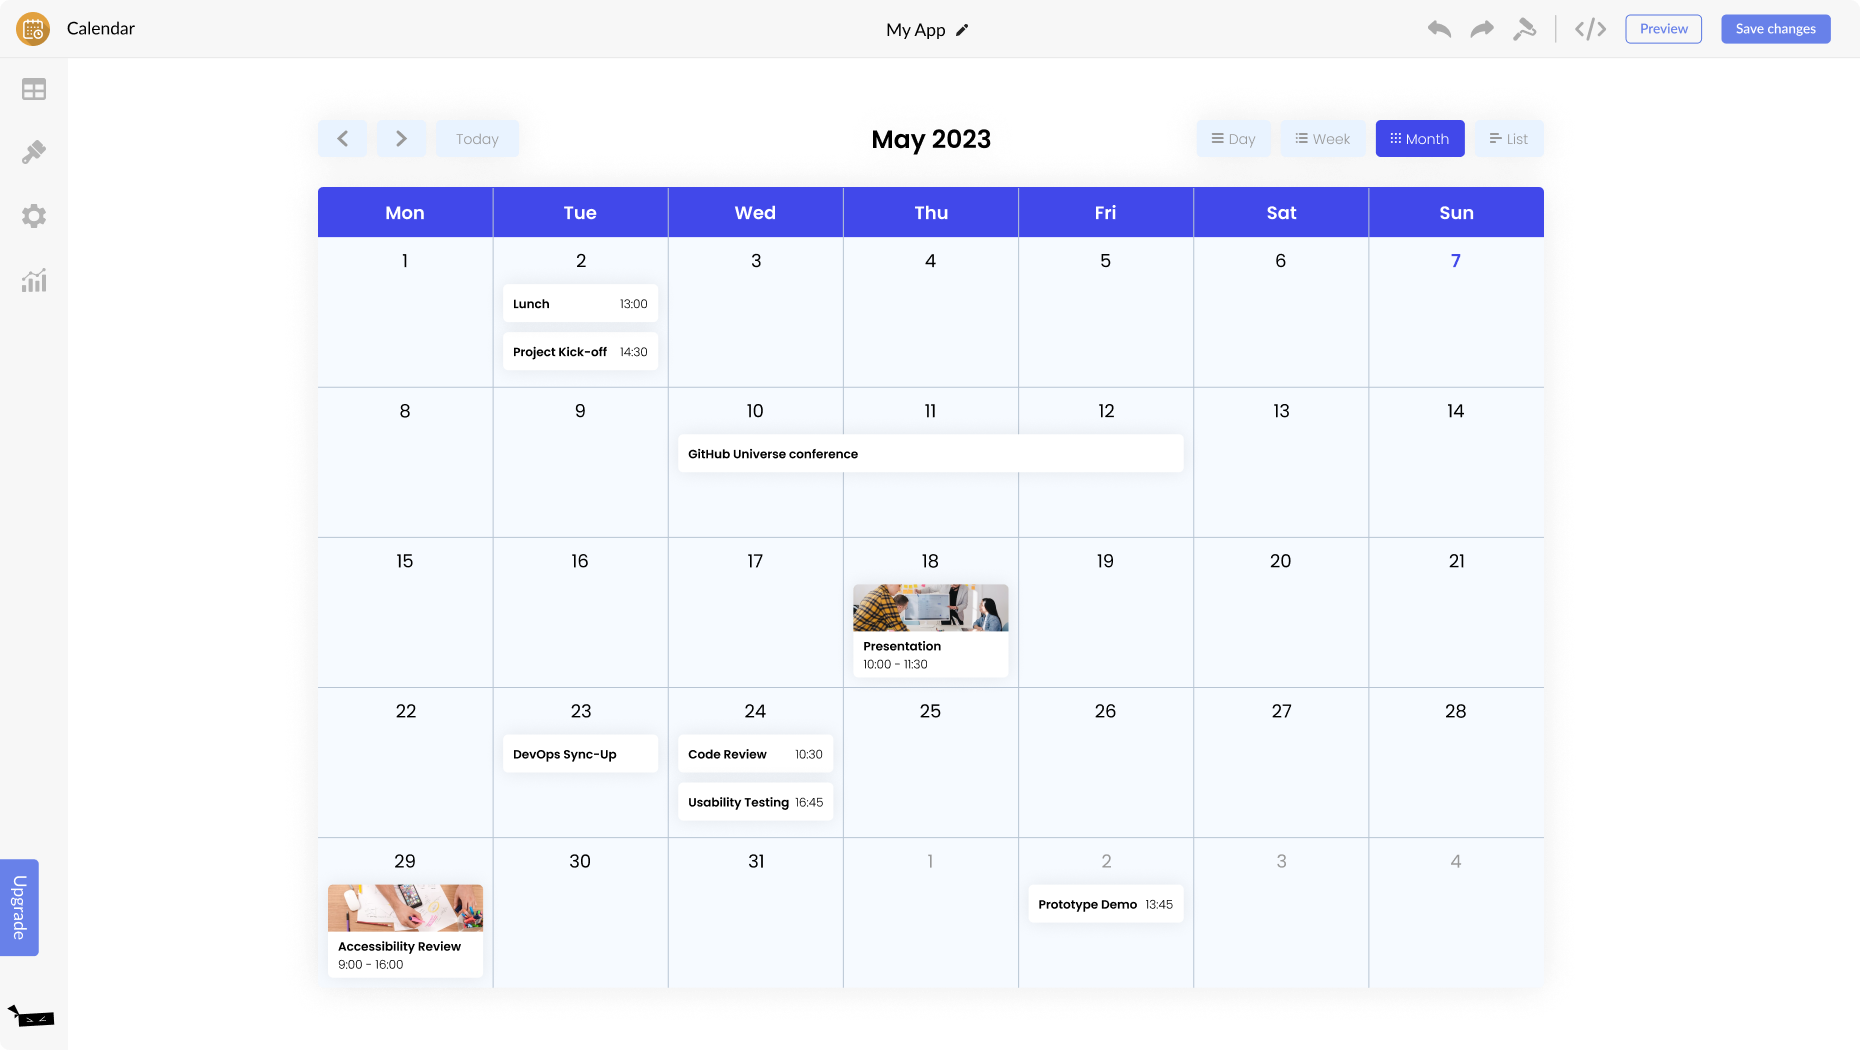 Calendar for ProHoster